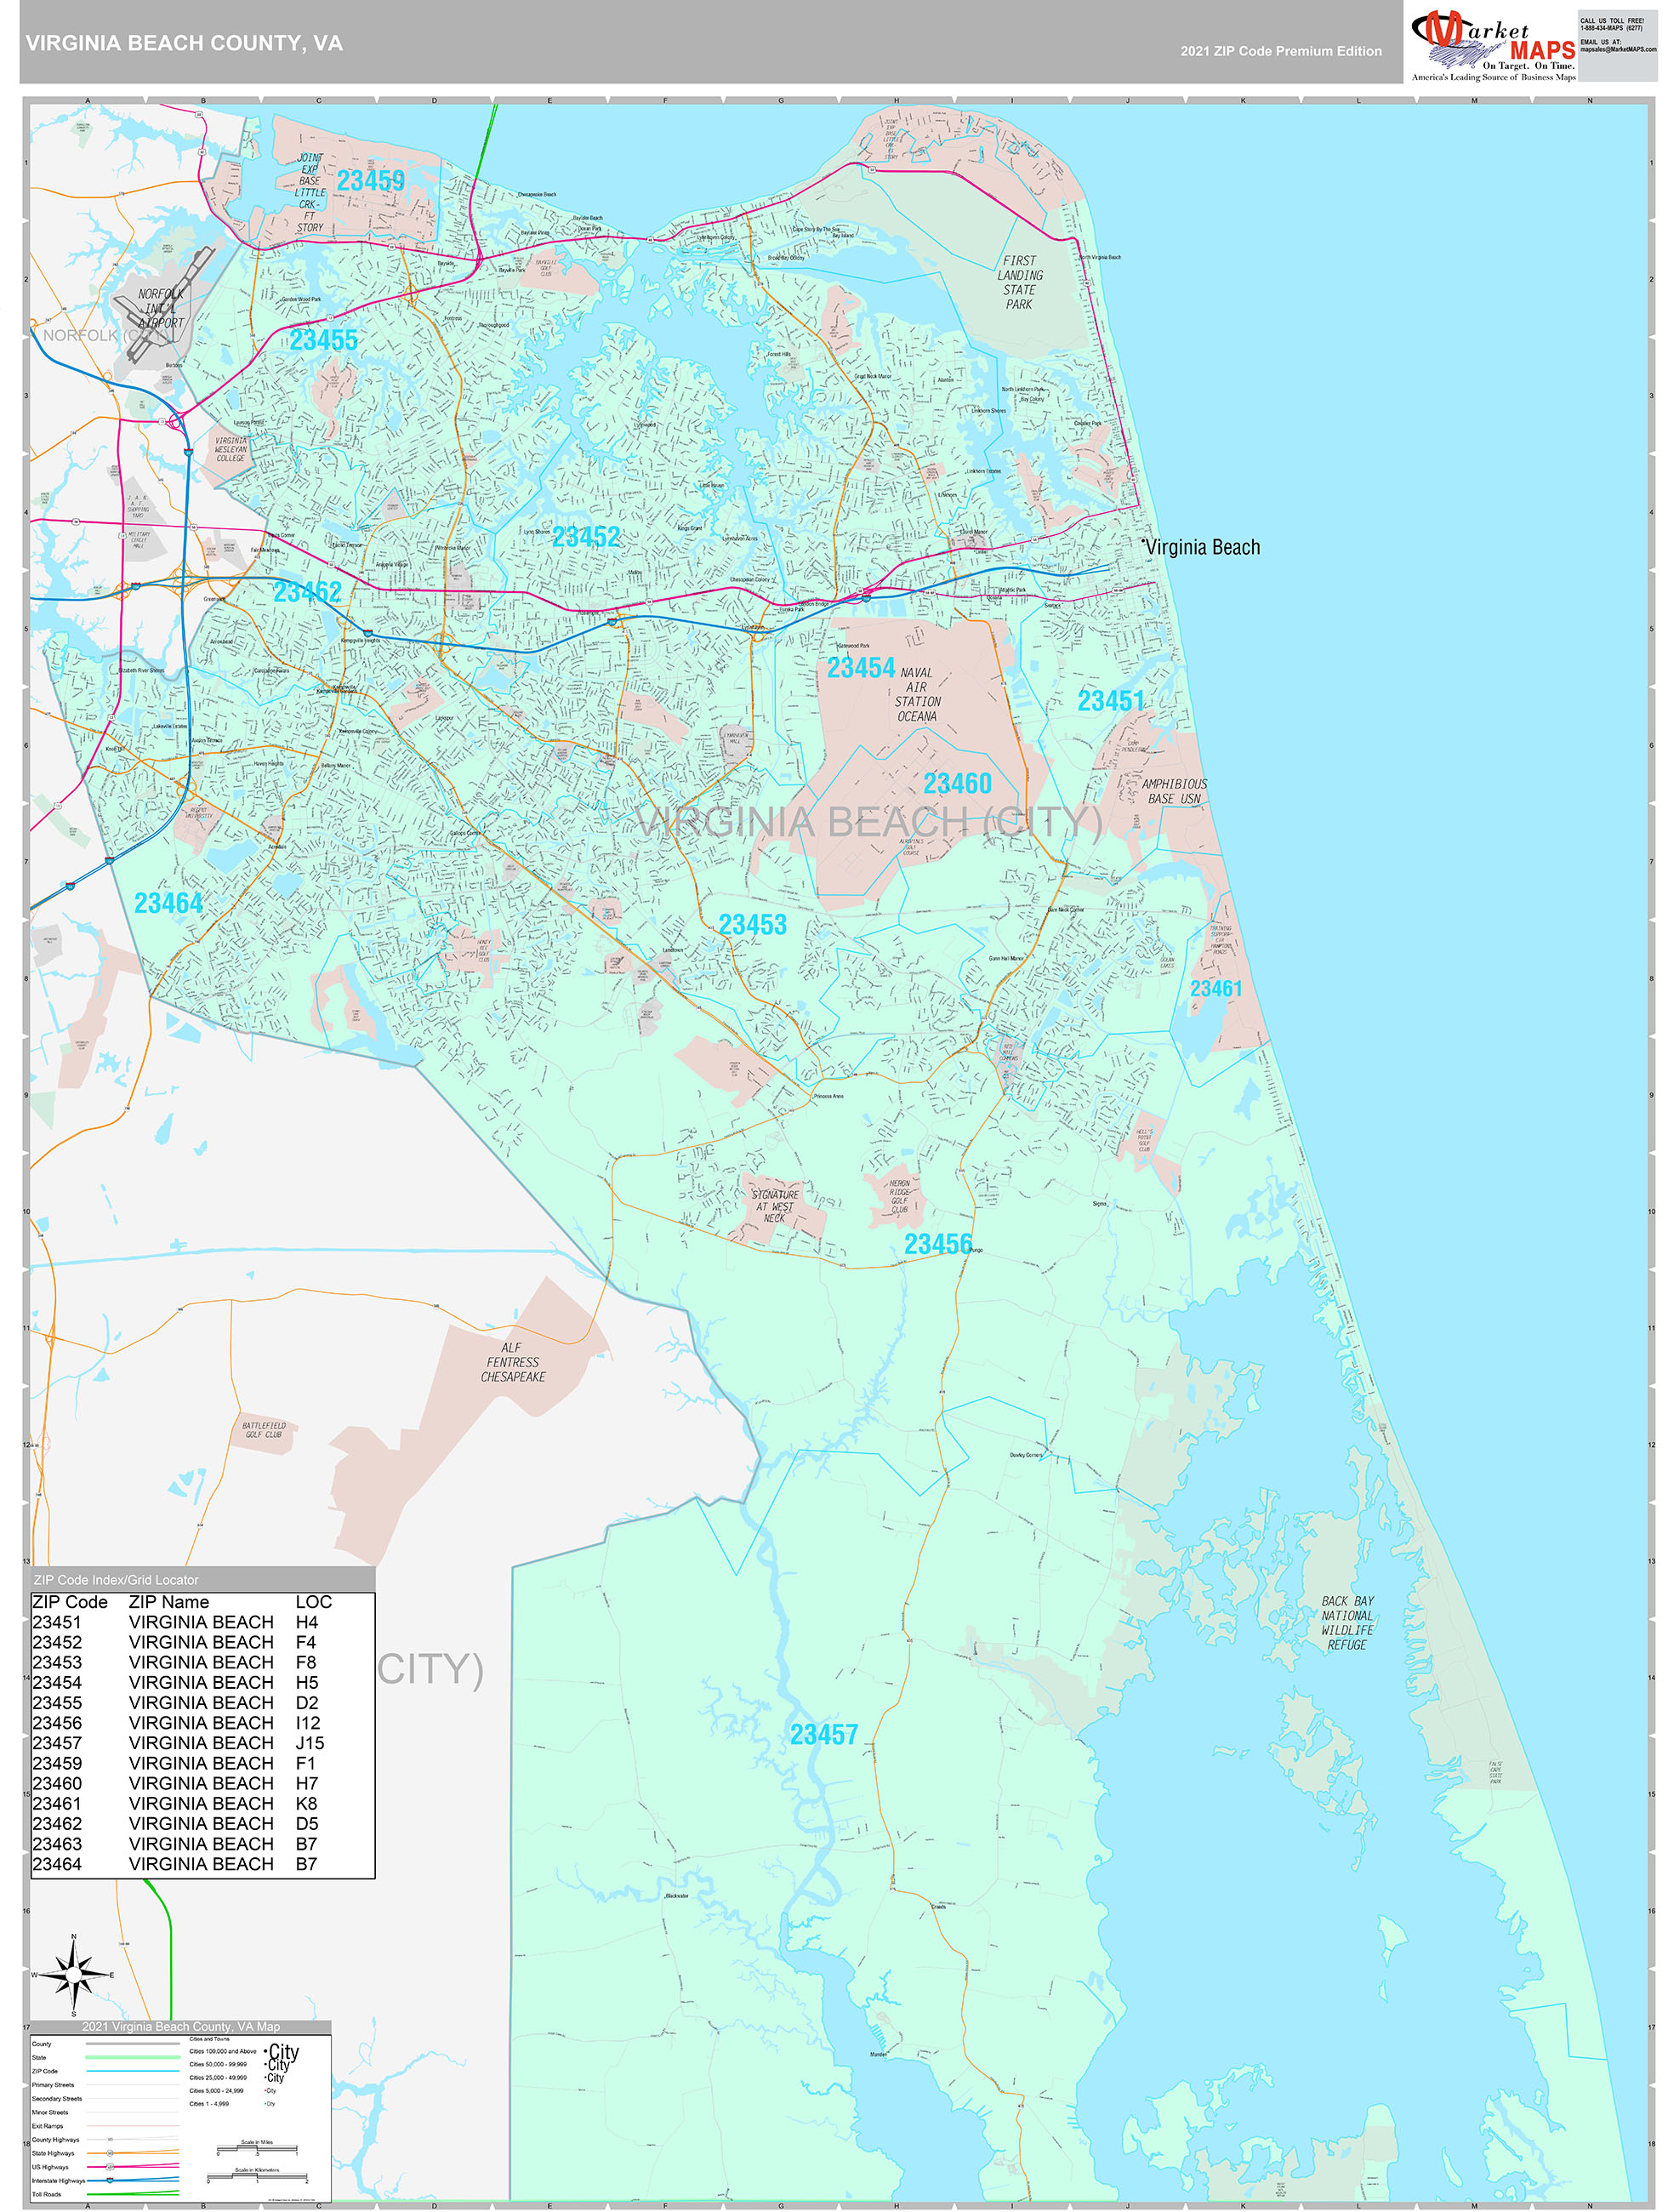 Virginia Beach County, VA Wall Map Premium Style by MarketMAPS